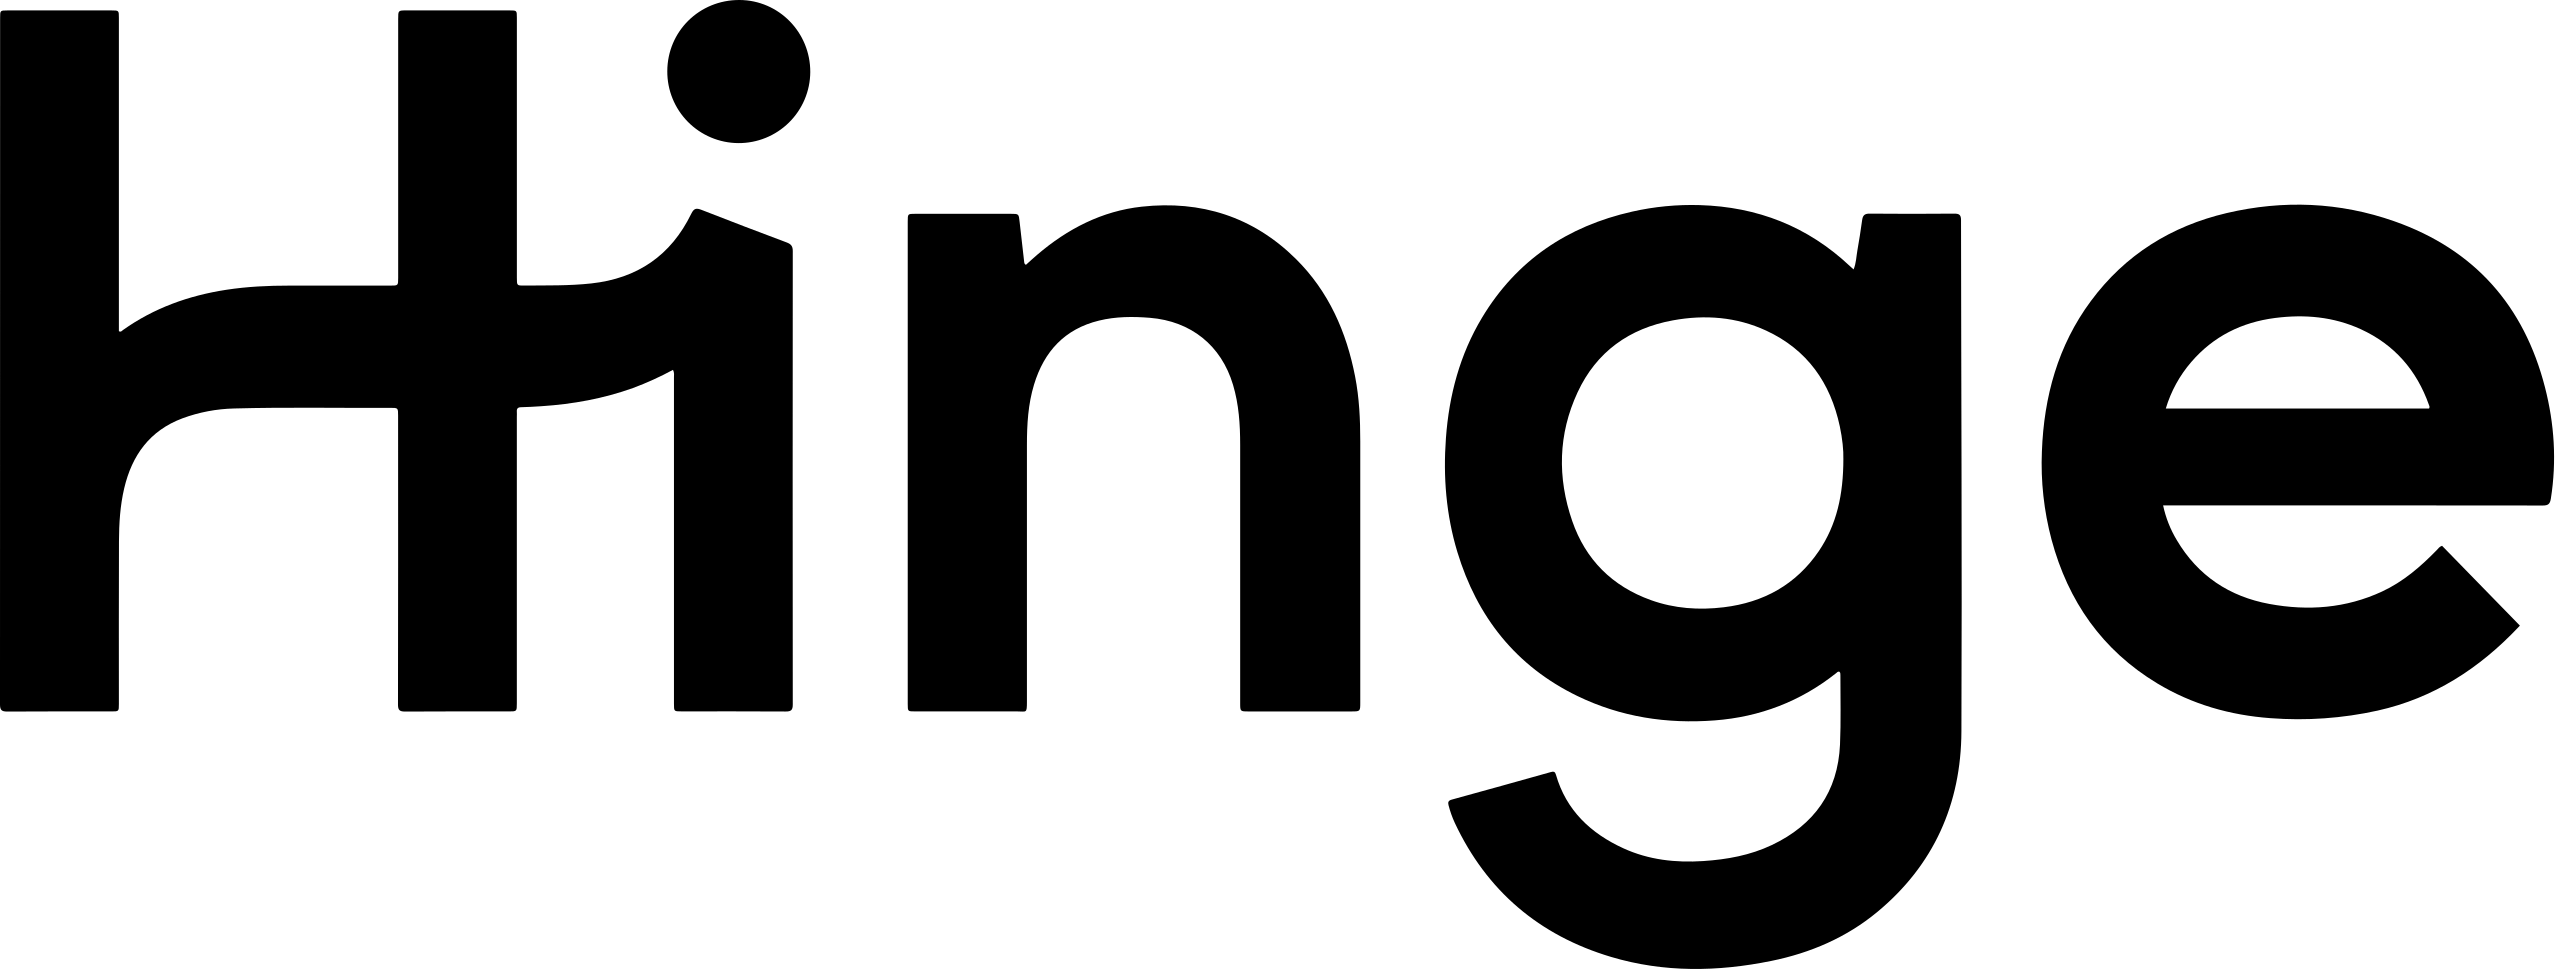 File:Hinge logo.svg - Wikimedia Commons